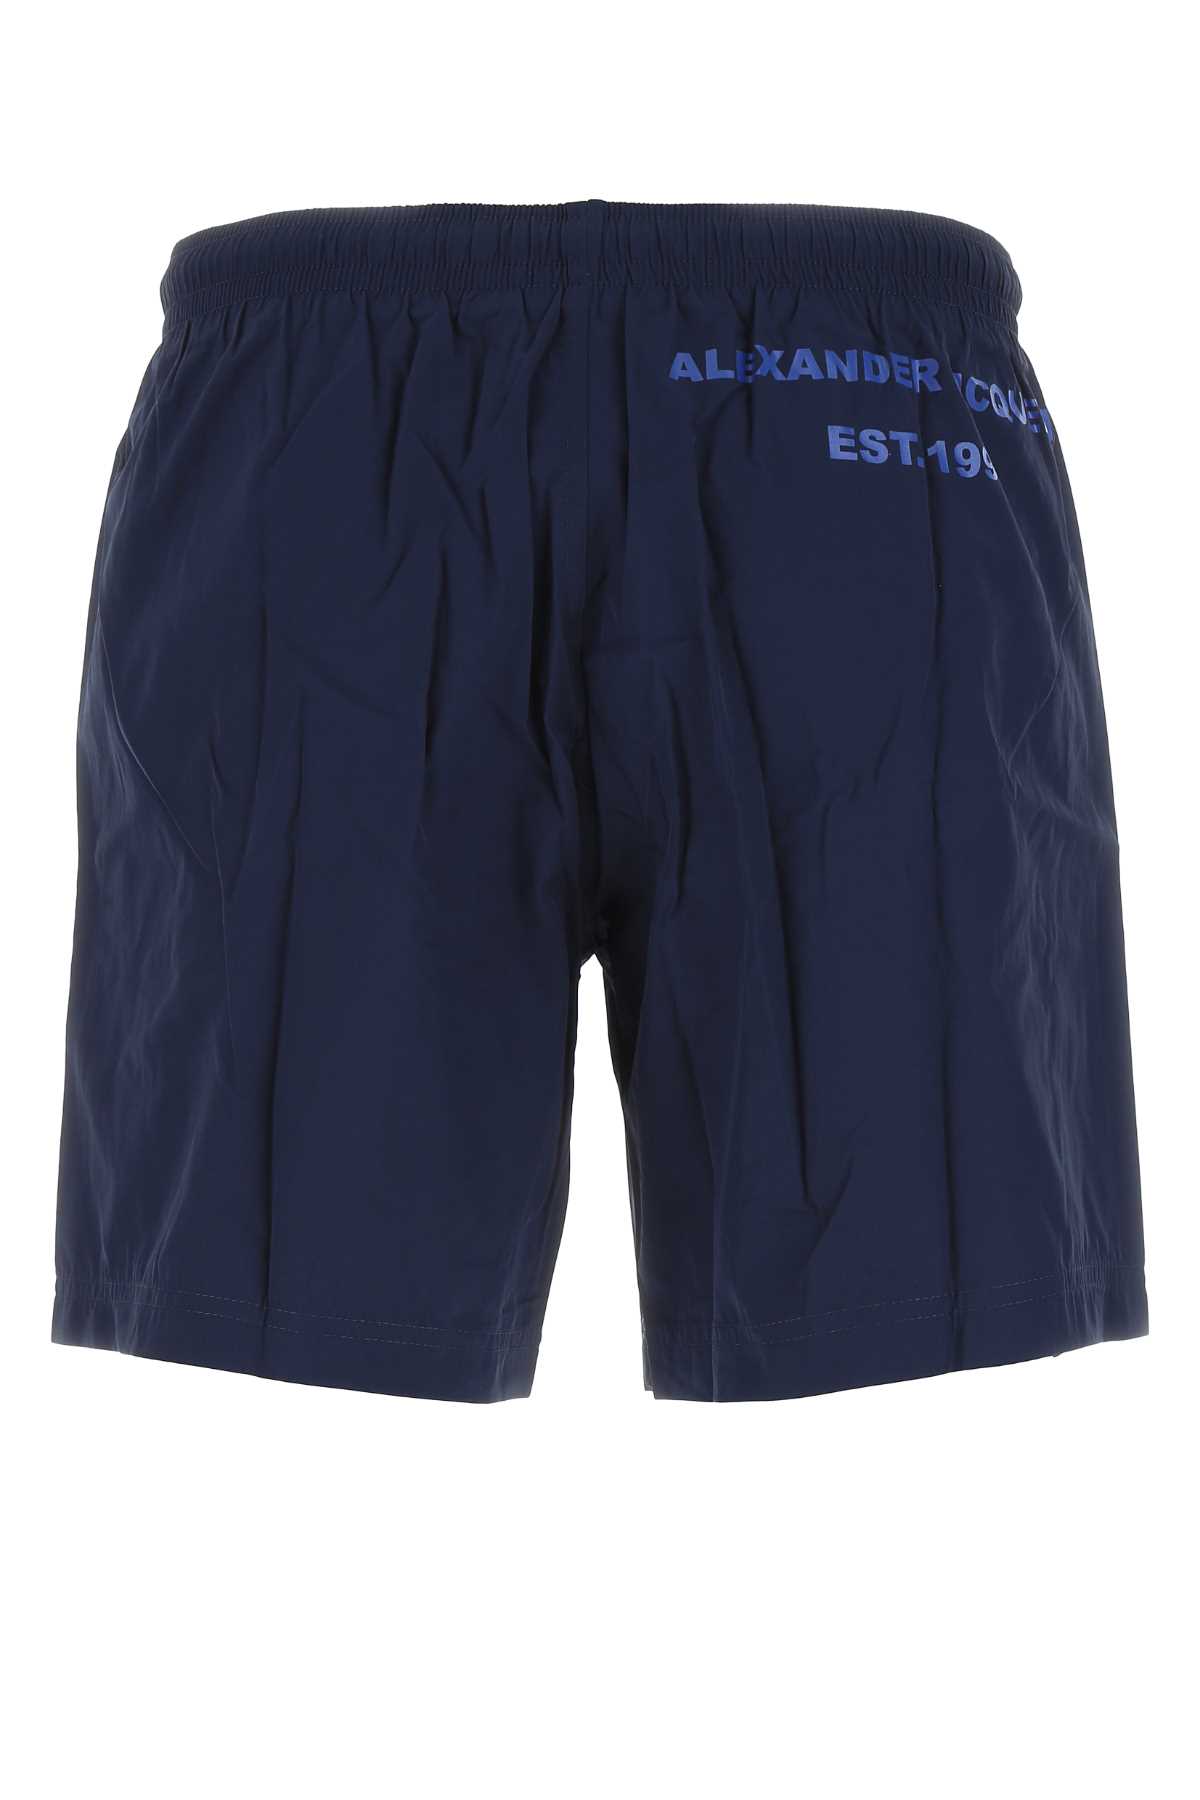 Alexander Mcqueen Midnight Blue Nylon Swimming Shorts In 4168